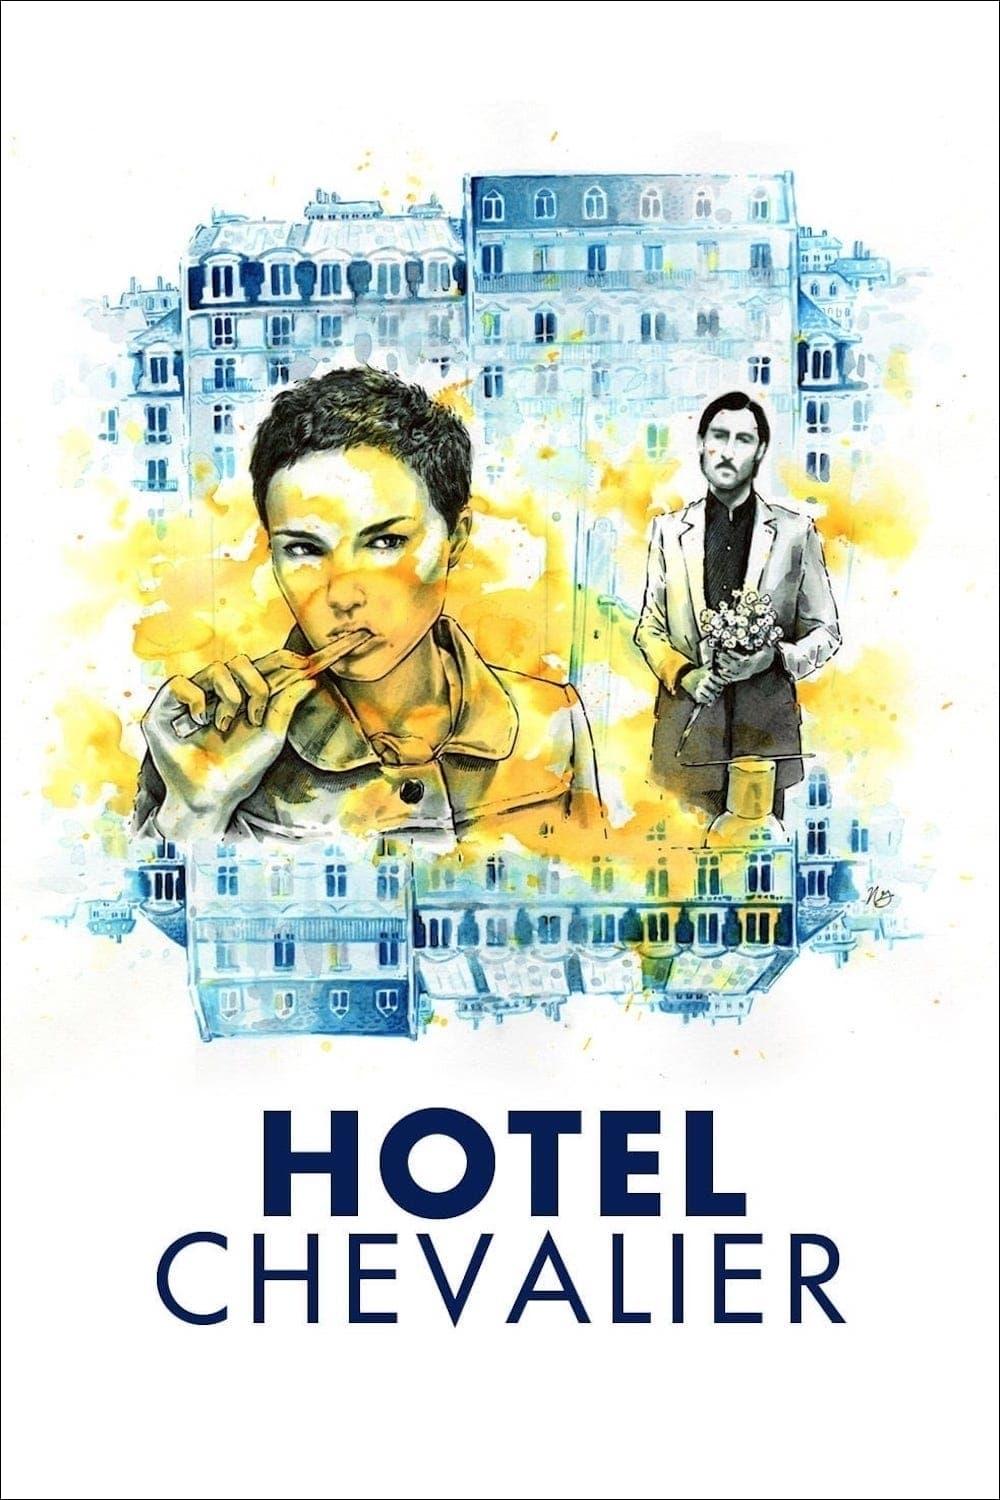 Hotel Chevalier poster